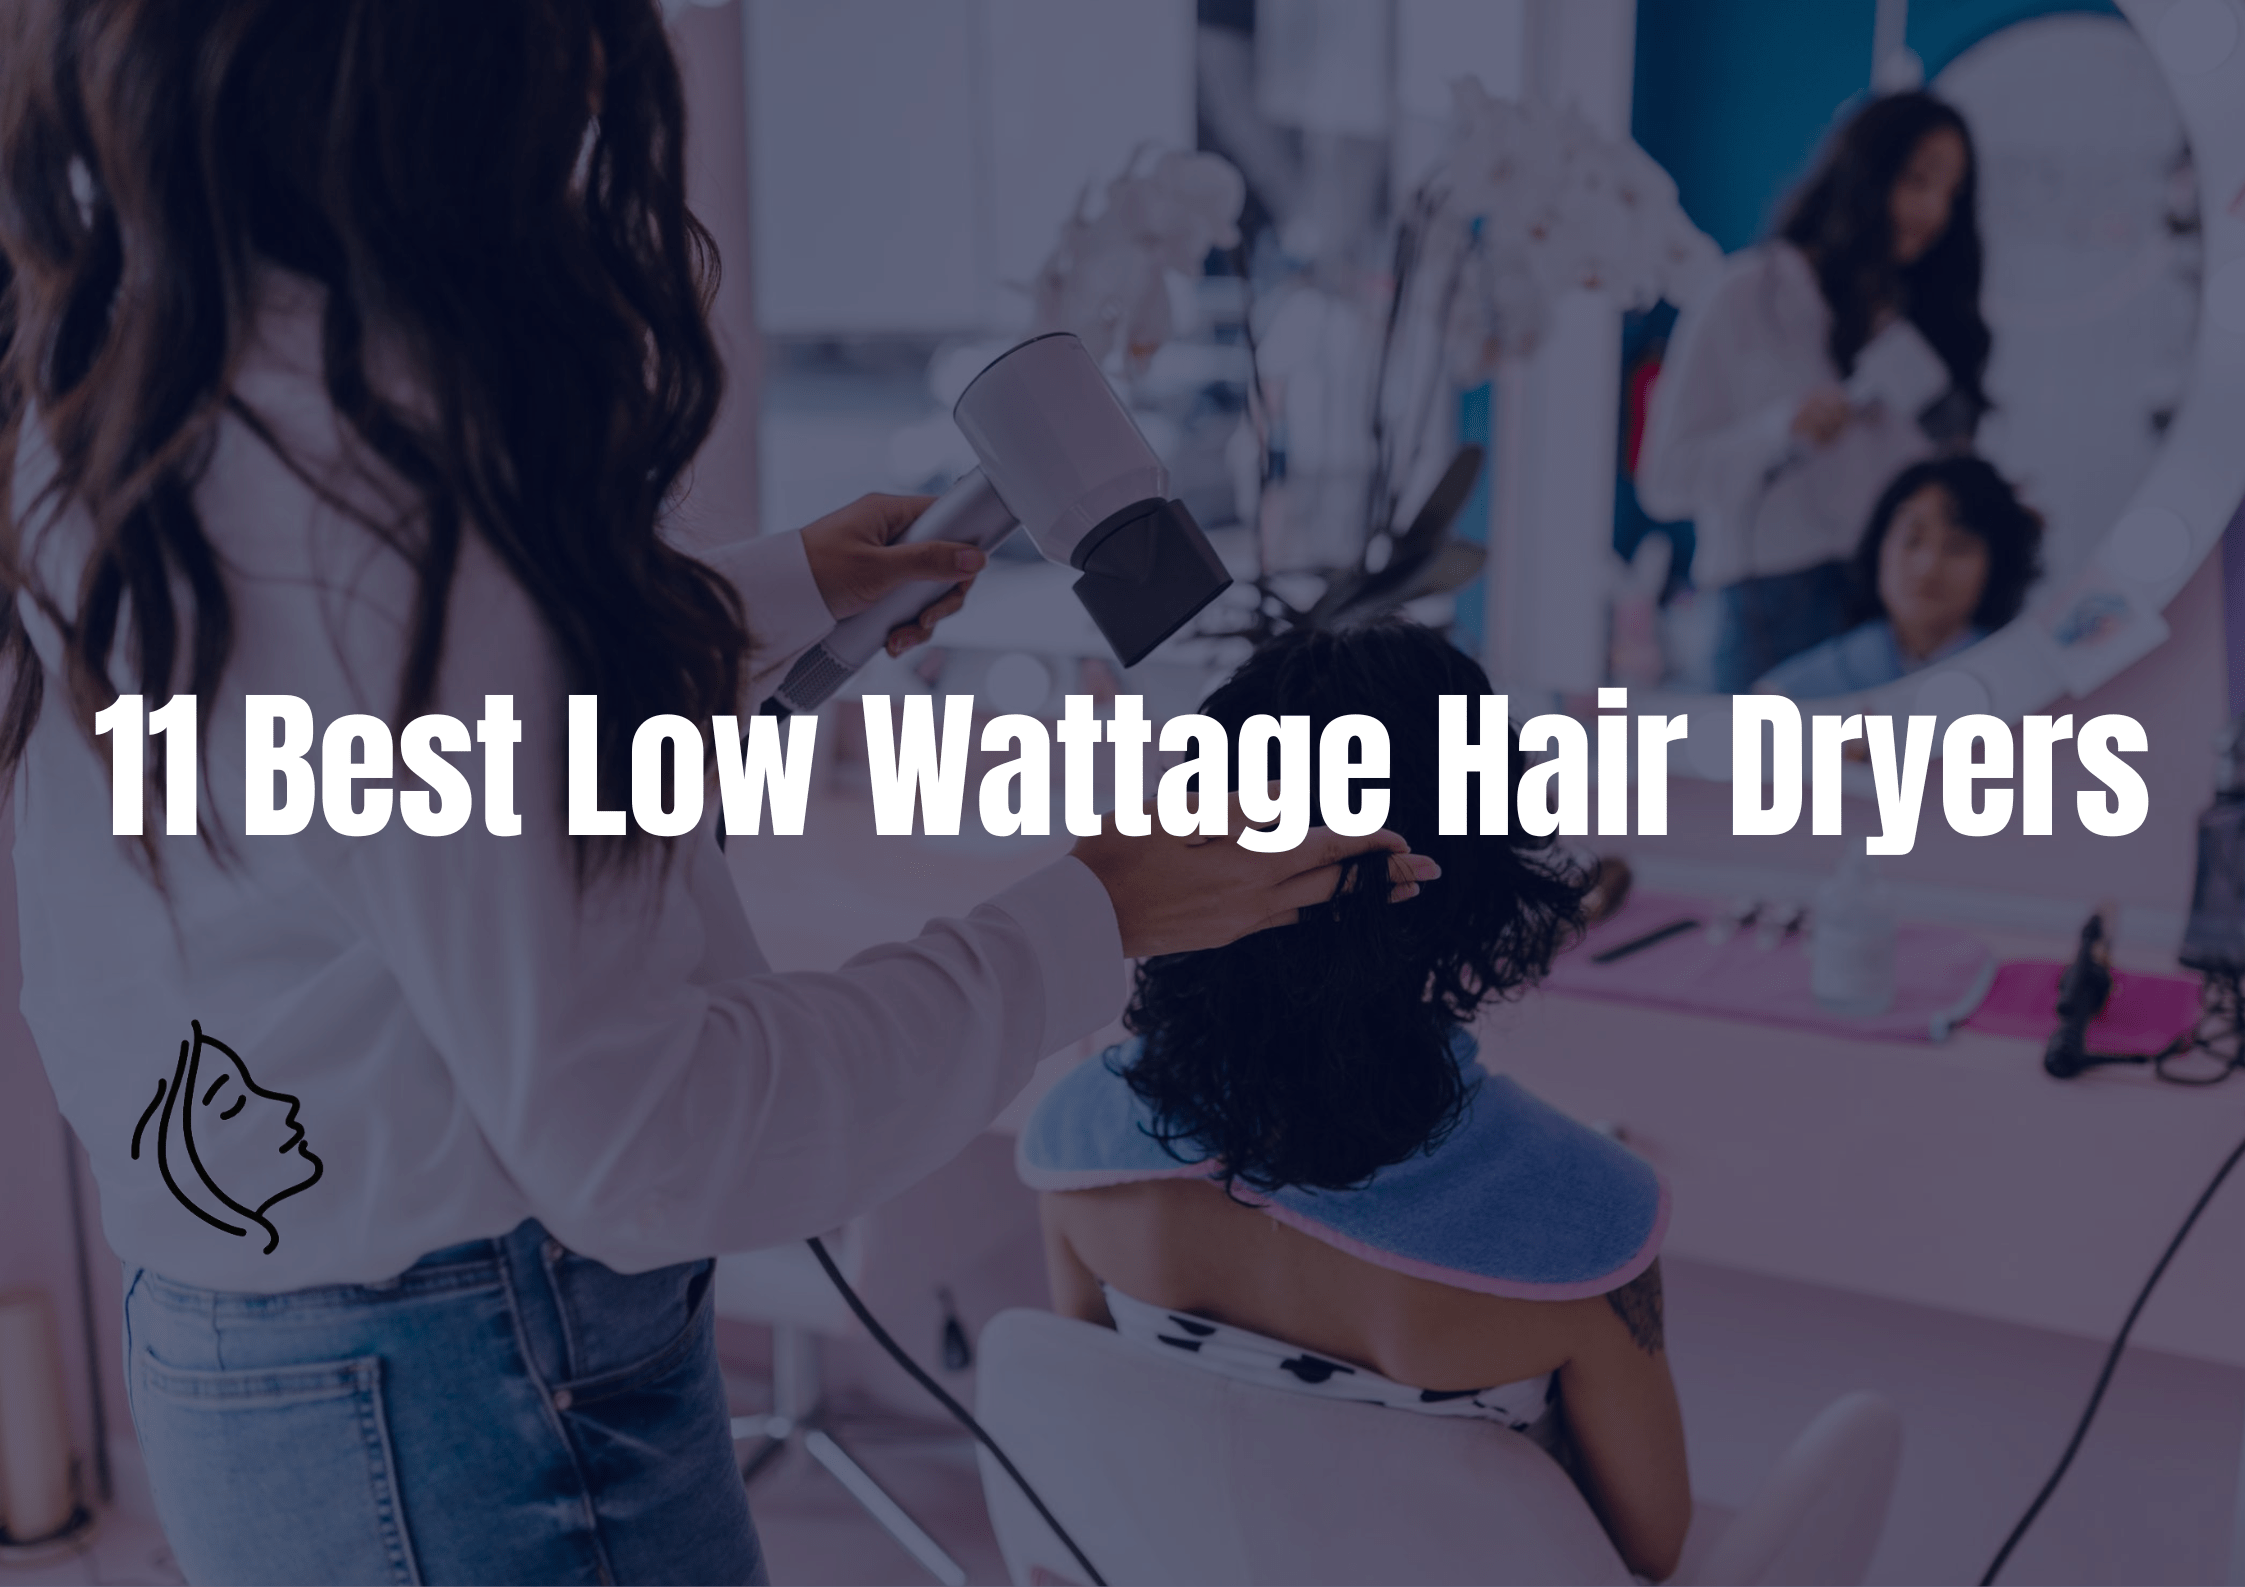 Low Wattage Hair Dryers